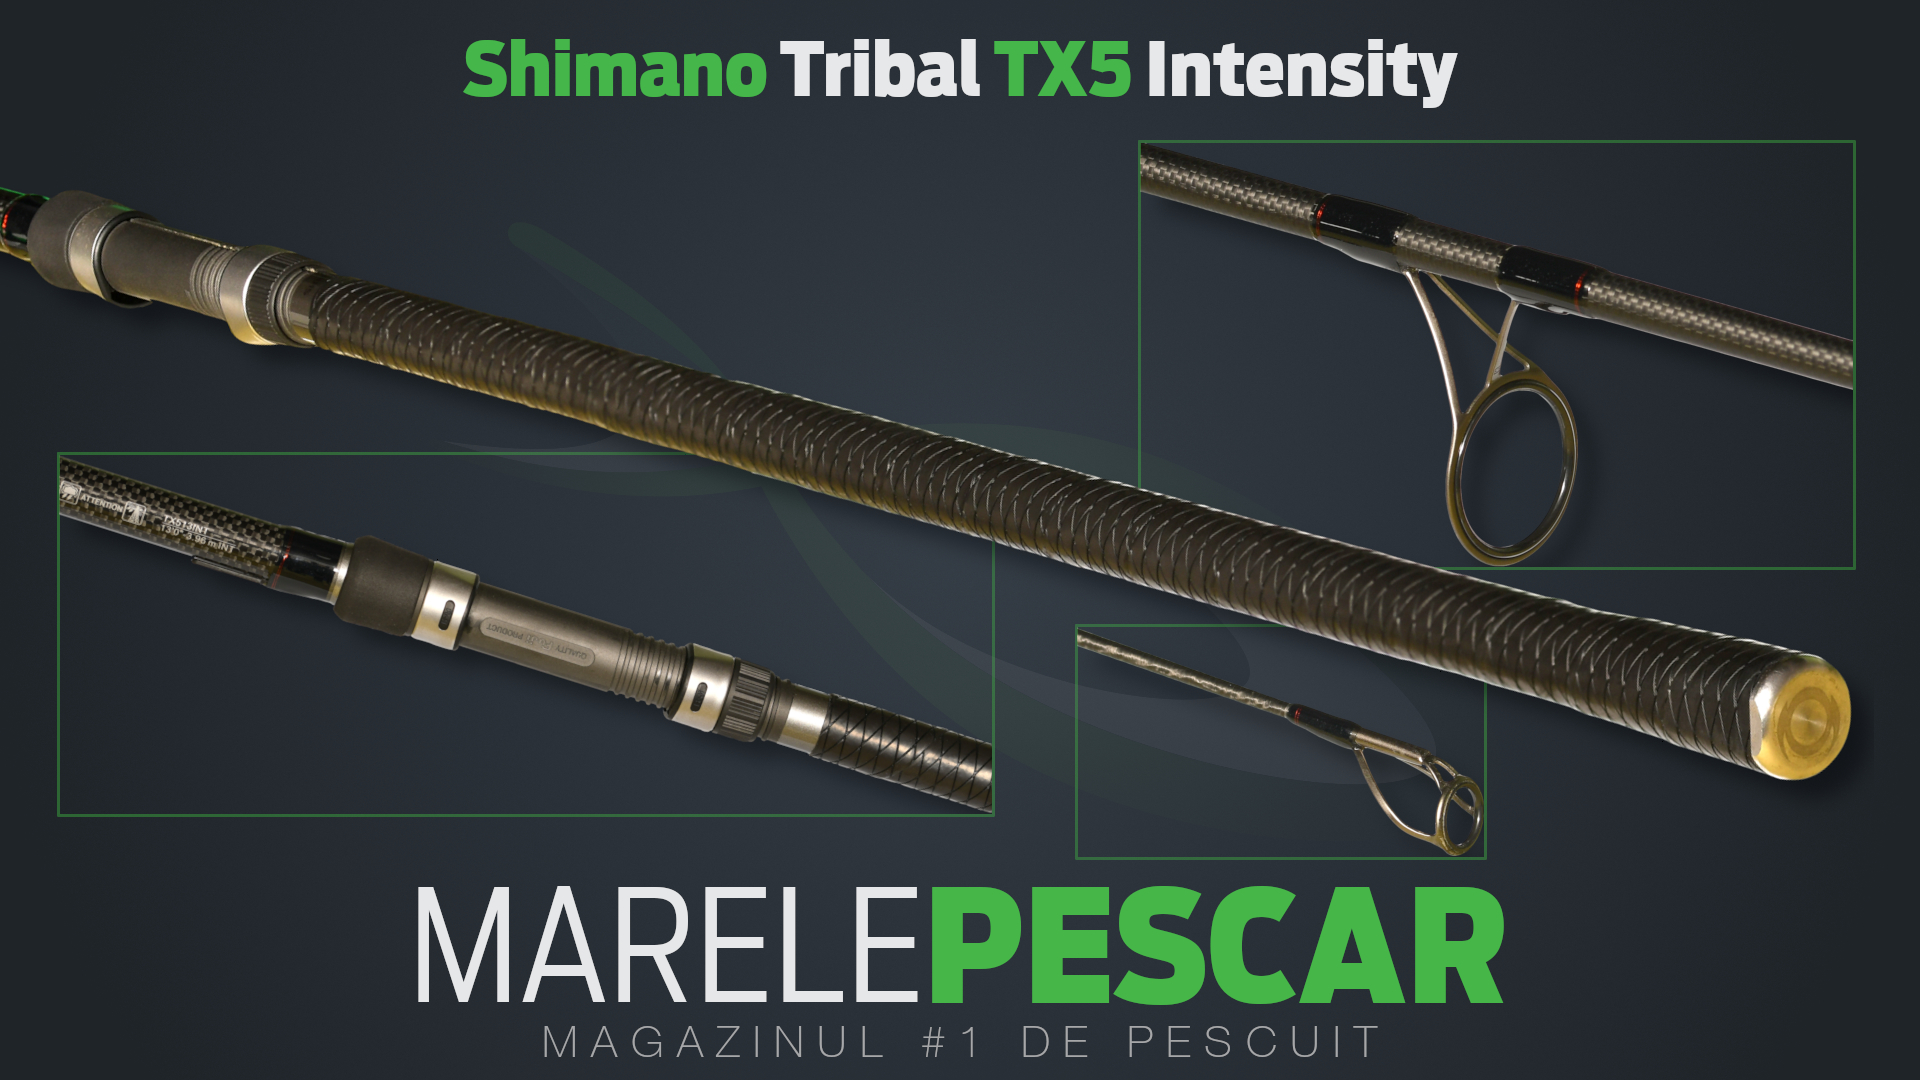 Shimano Tribal TX5 Intensity